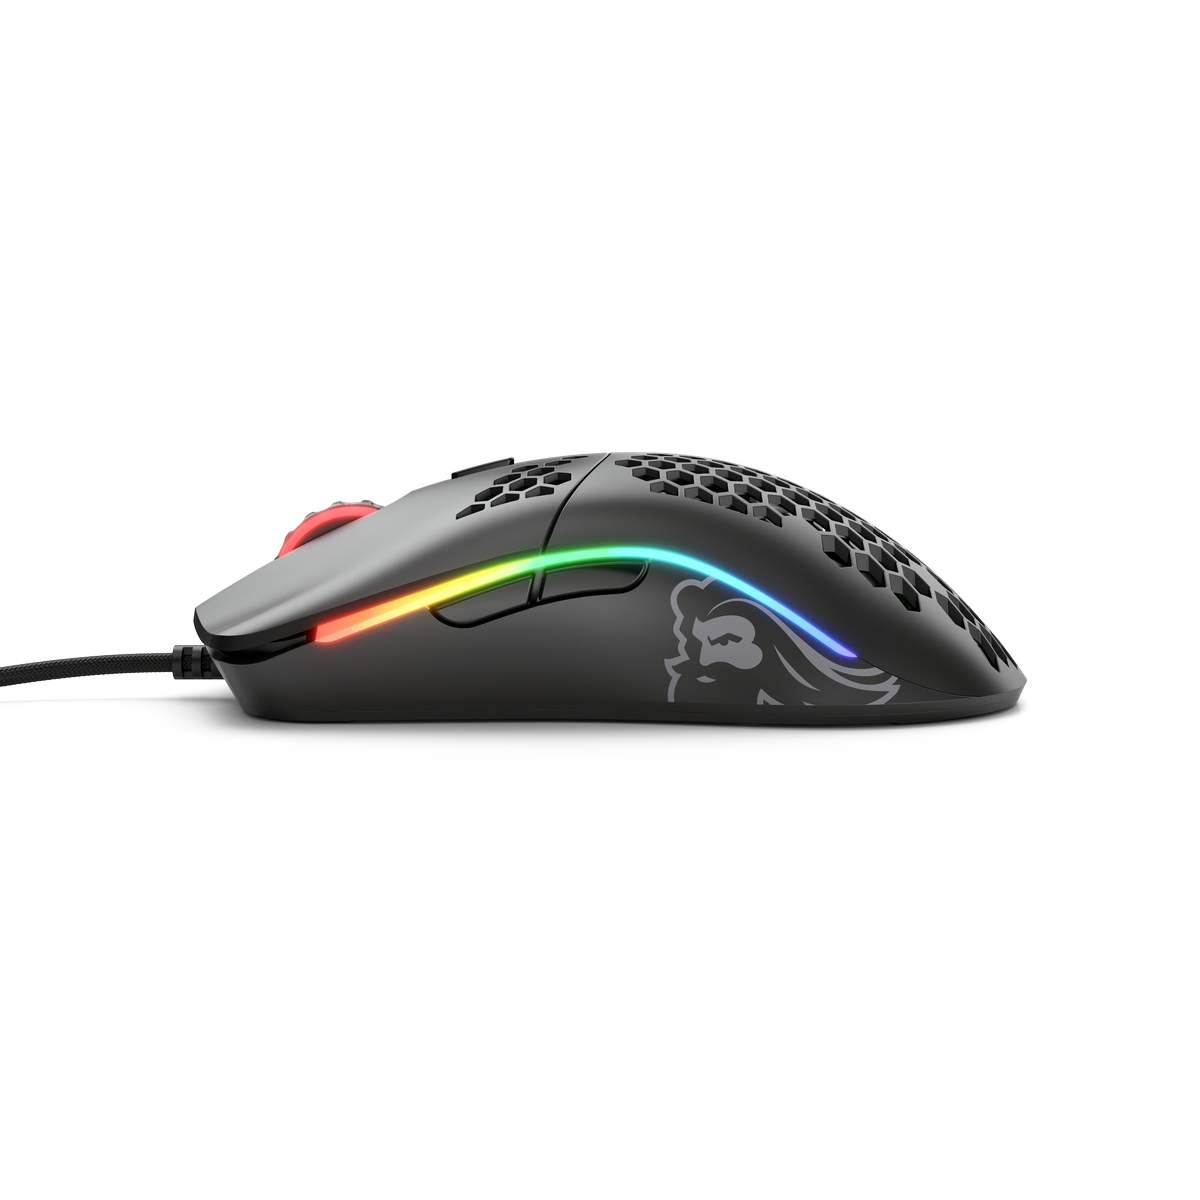 Glorious - Glorious Model O- USB RGB Odin Optical Gaming Mouse - Matte Black (GOM-BLACK)